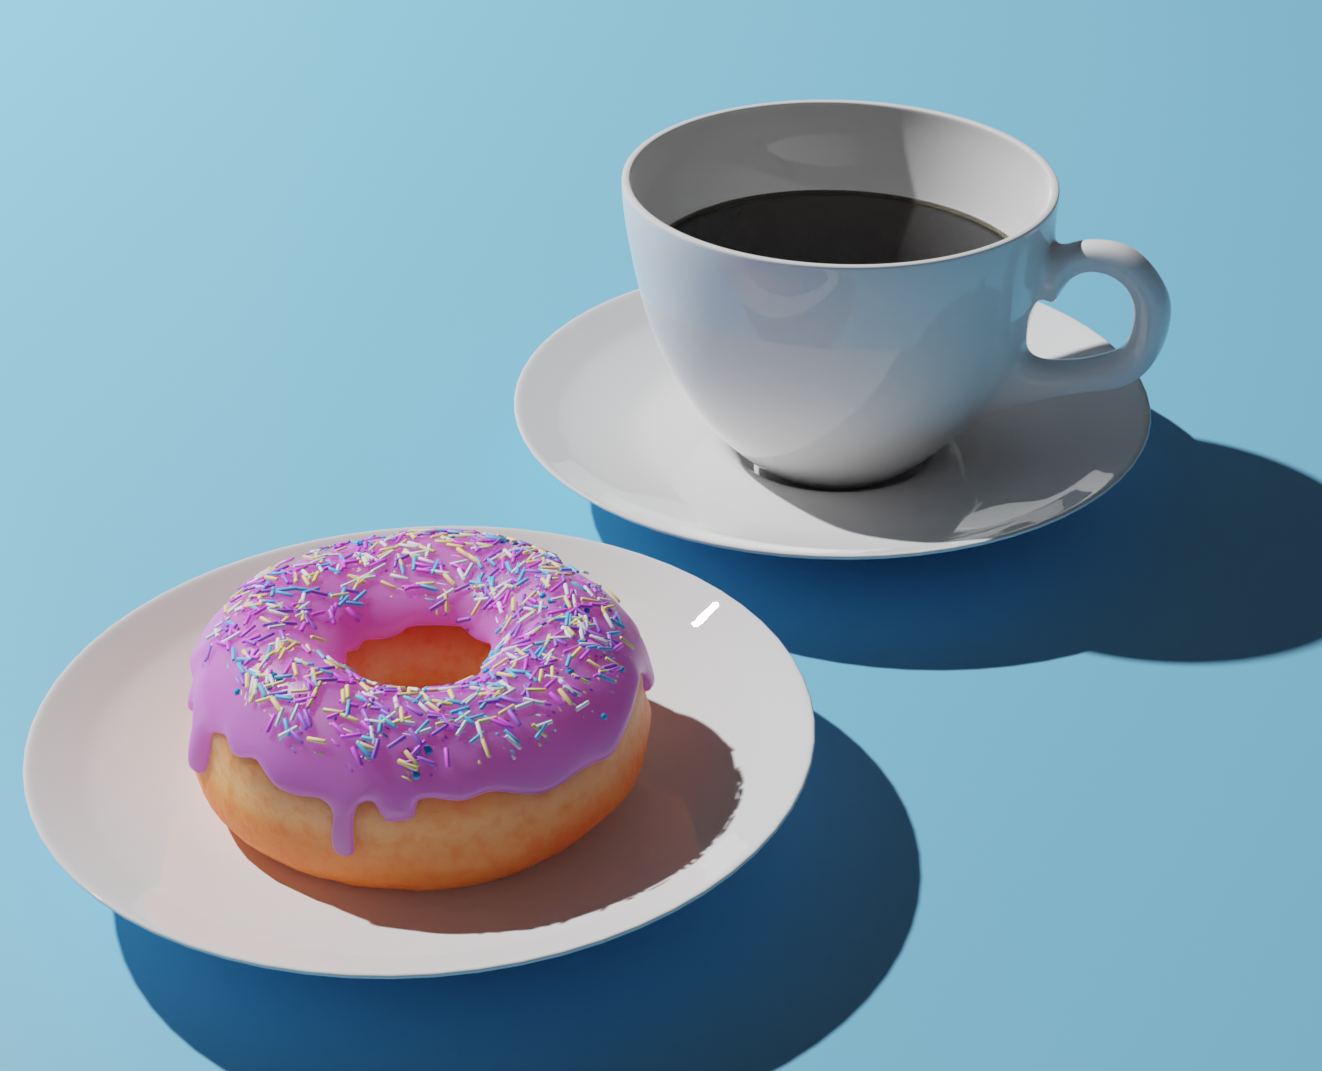 Donut and Coffee Blender Render, 2021